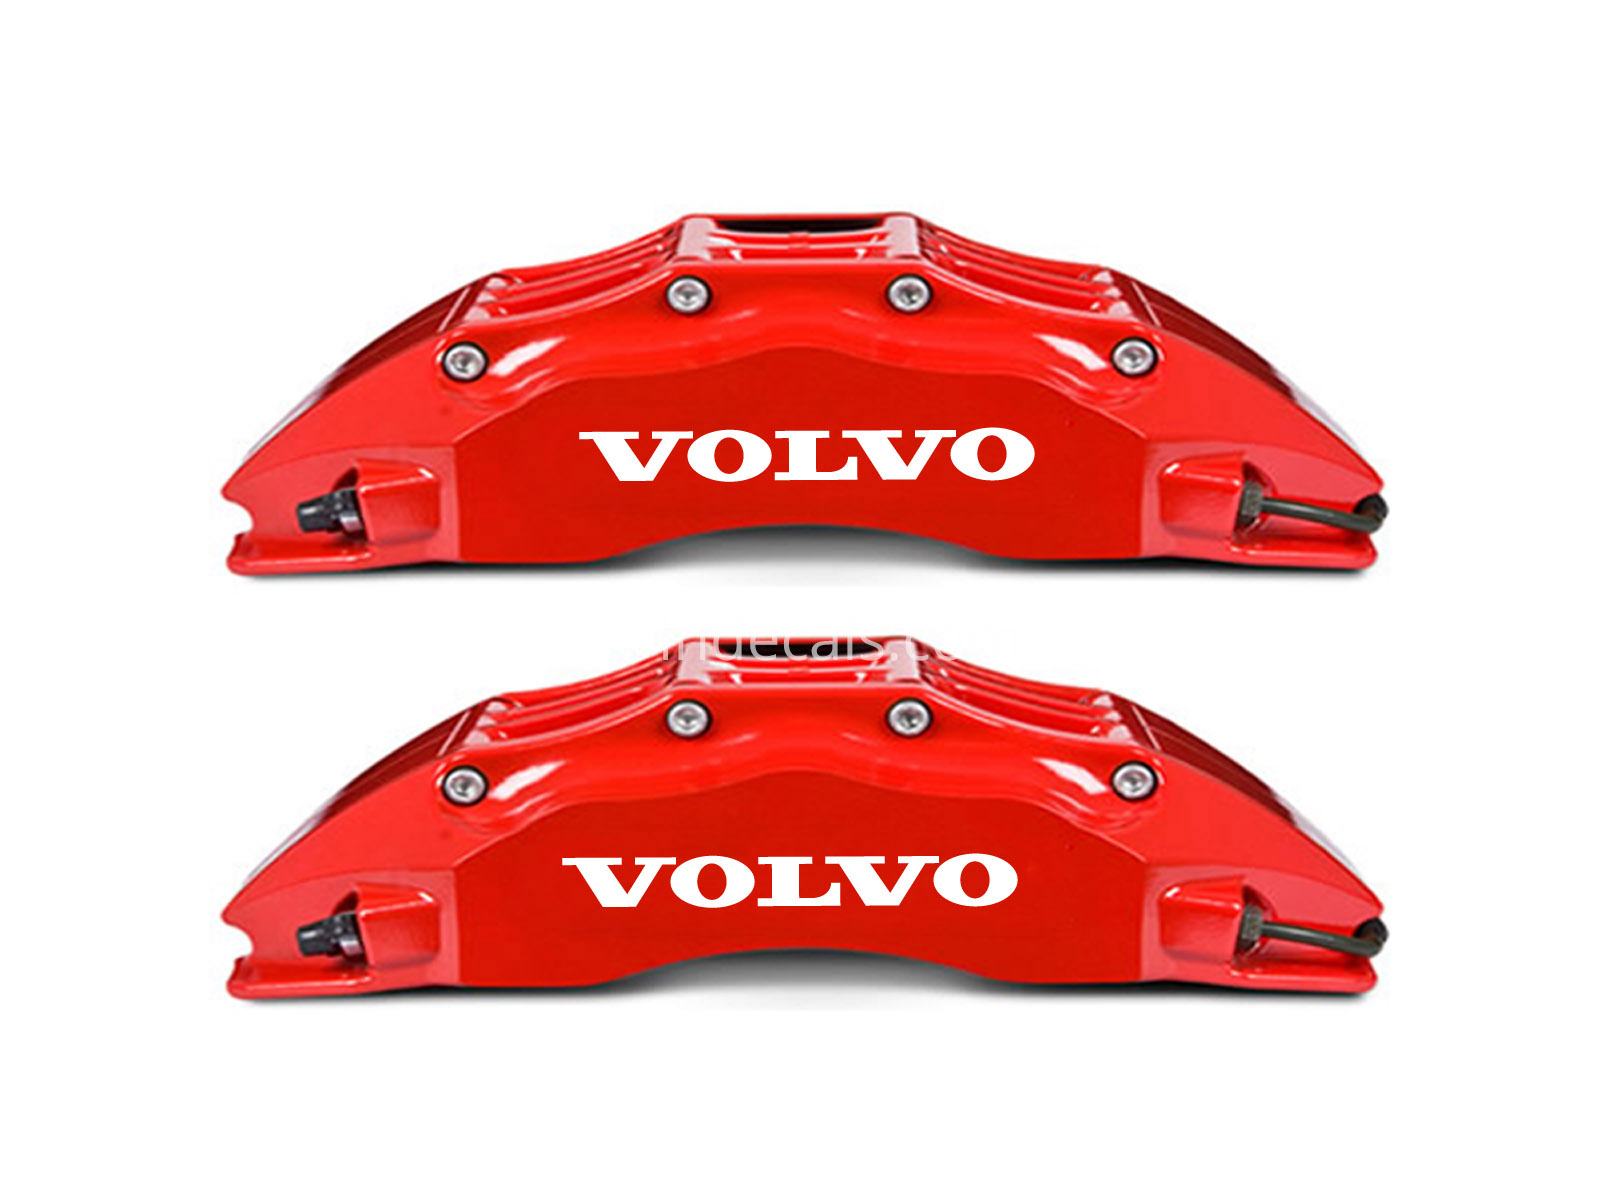 6 x Volvo Stickers for Brakes - White